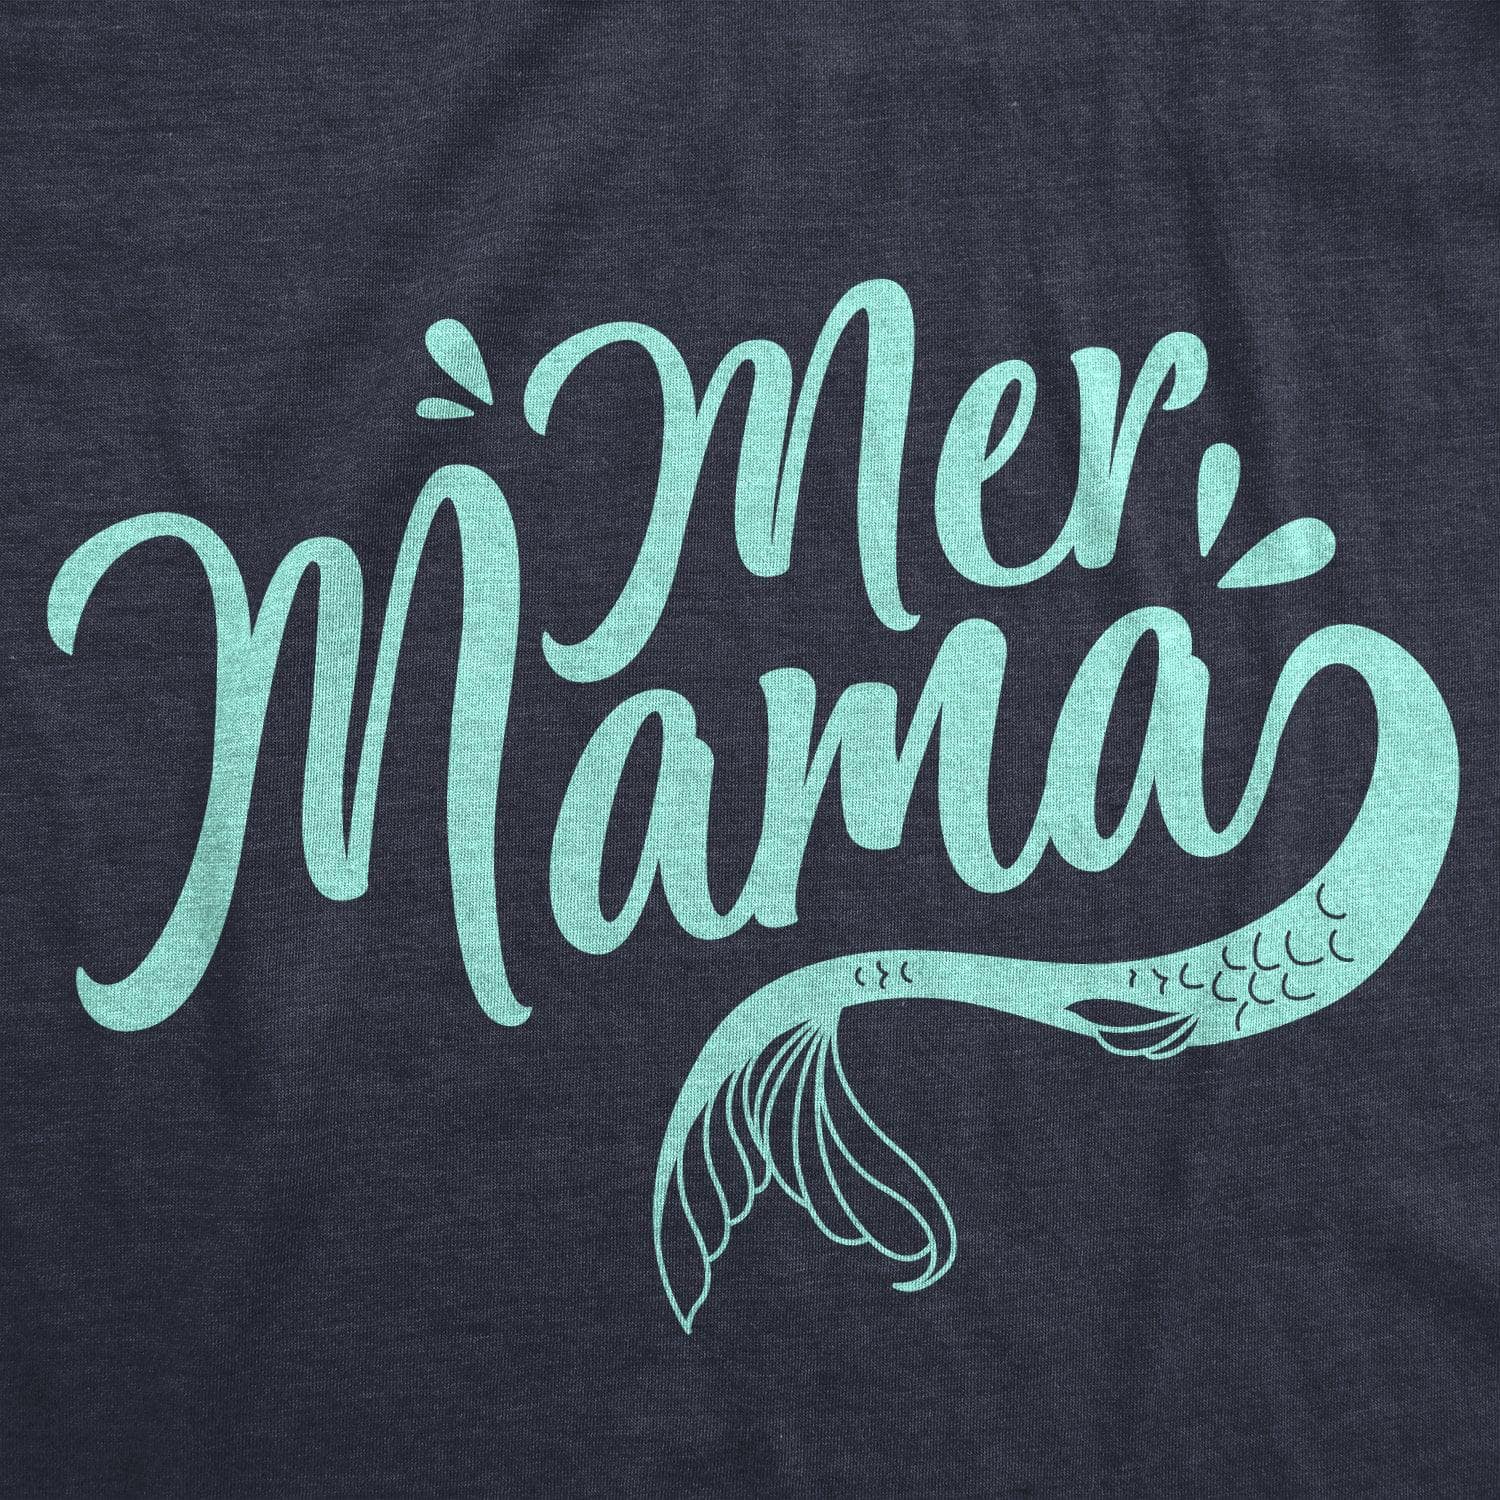 Mermama Women's Tshirt  -  Crazy Dog T-Shirts